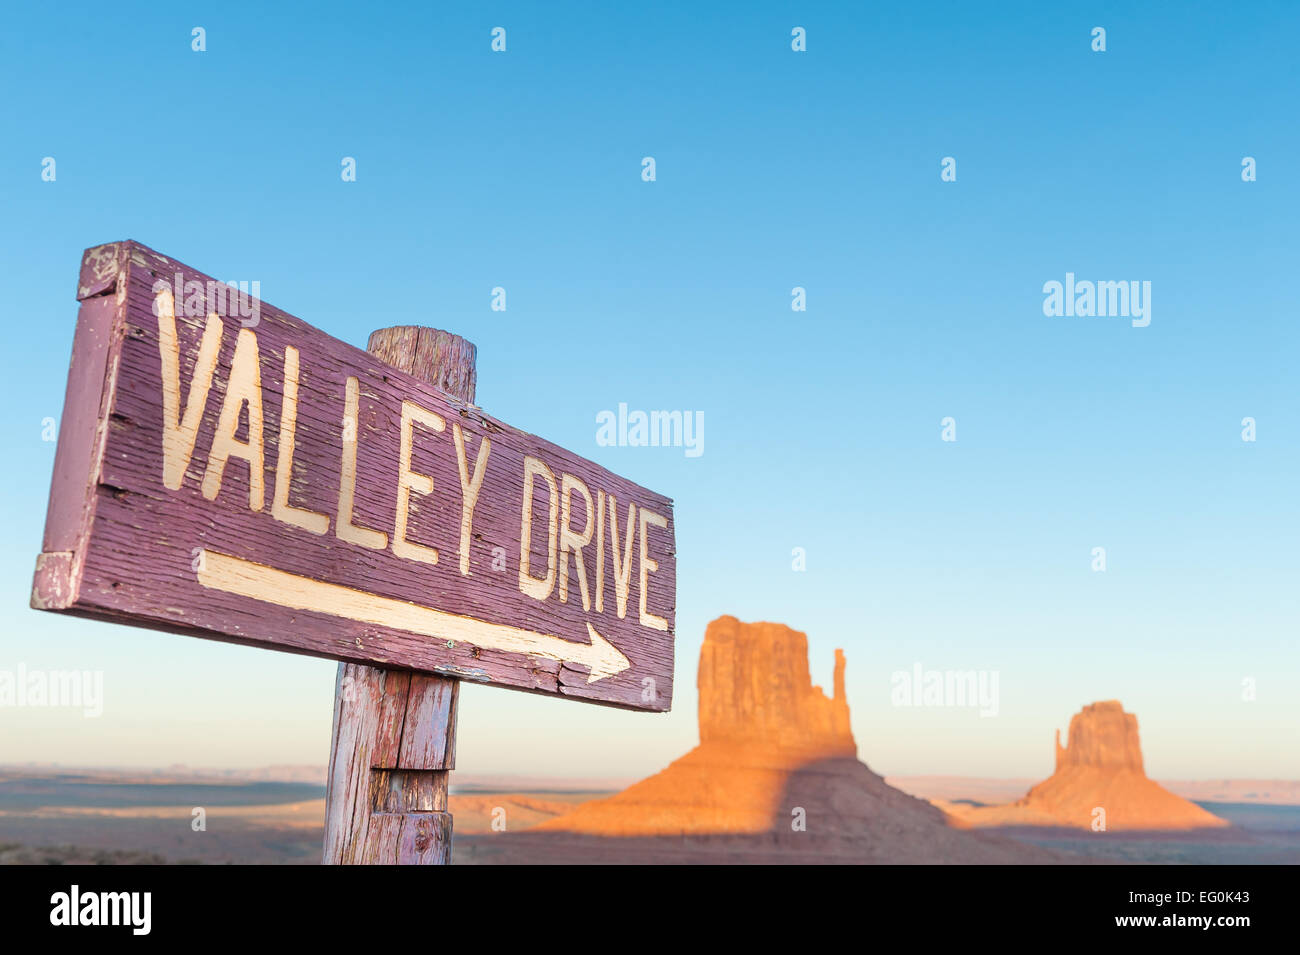 Valley Drive sign, Monument Valley, Arizona Utah border, USA Stock Photo